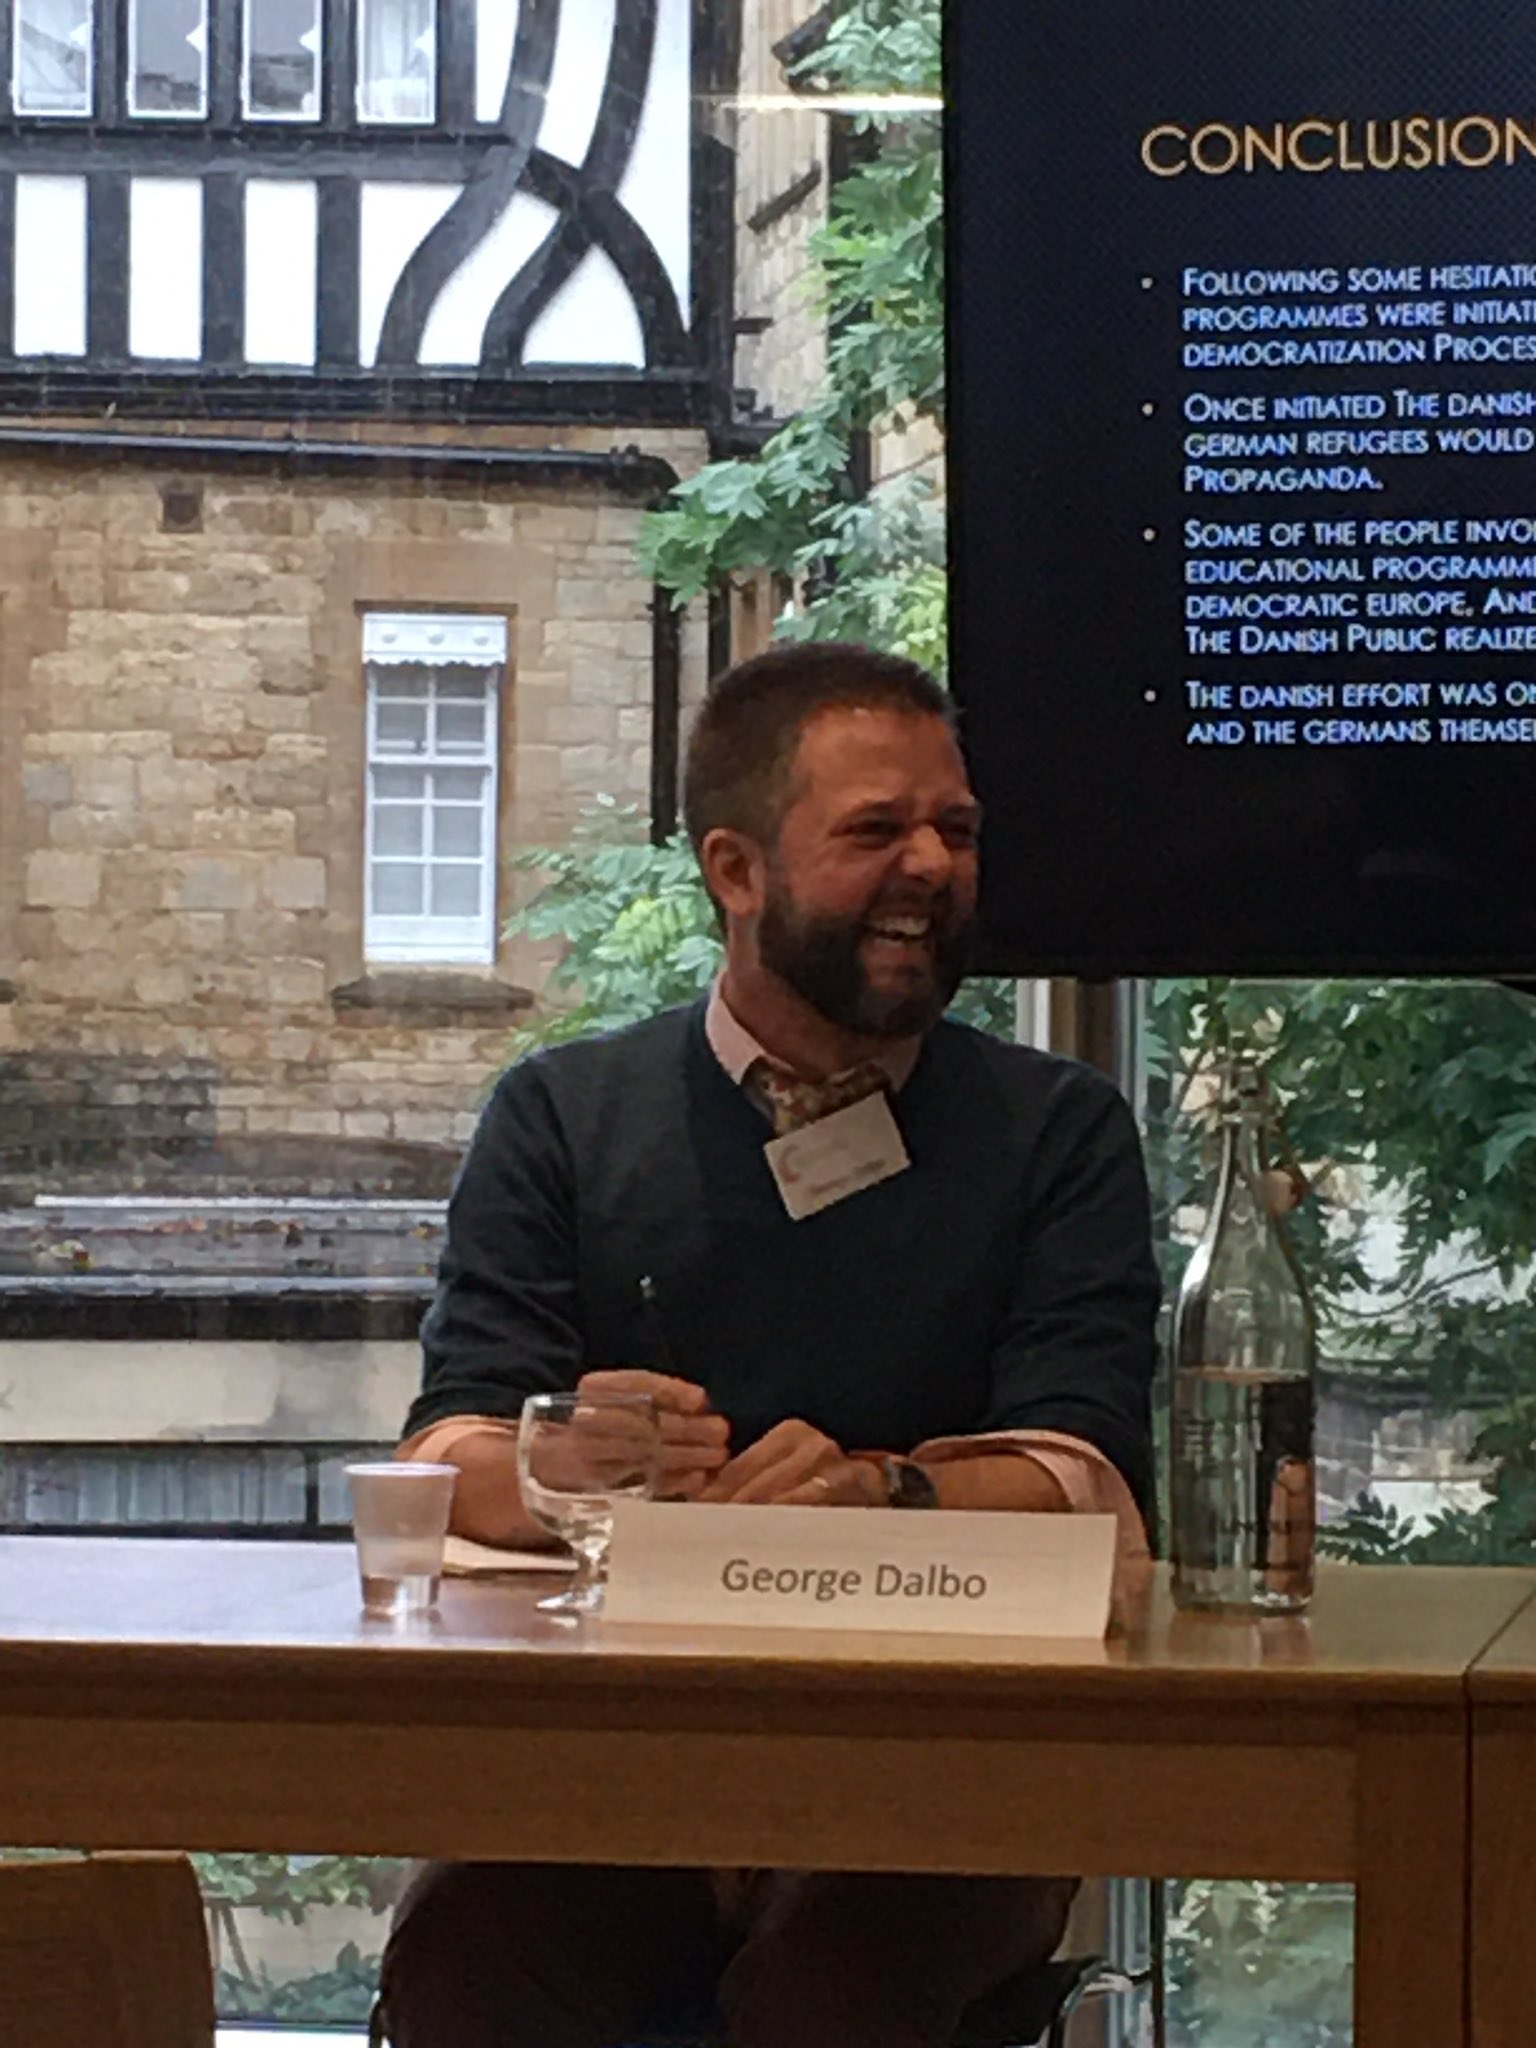 George Dalbo presenting at Oxford